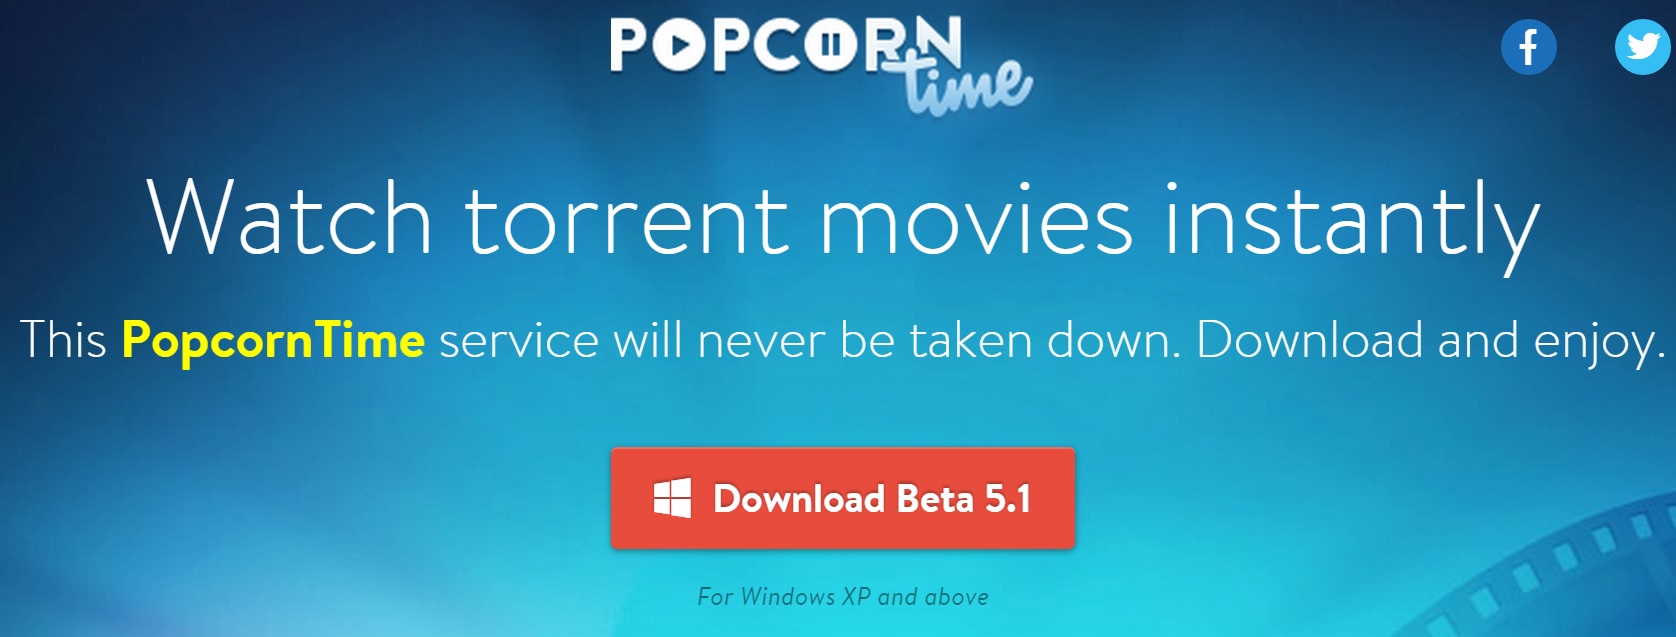 popcorn timewindows 7 64 bit